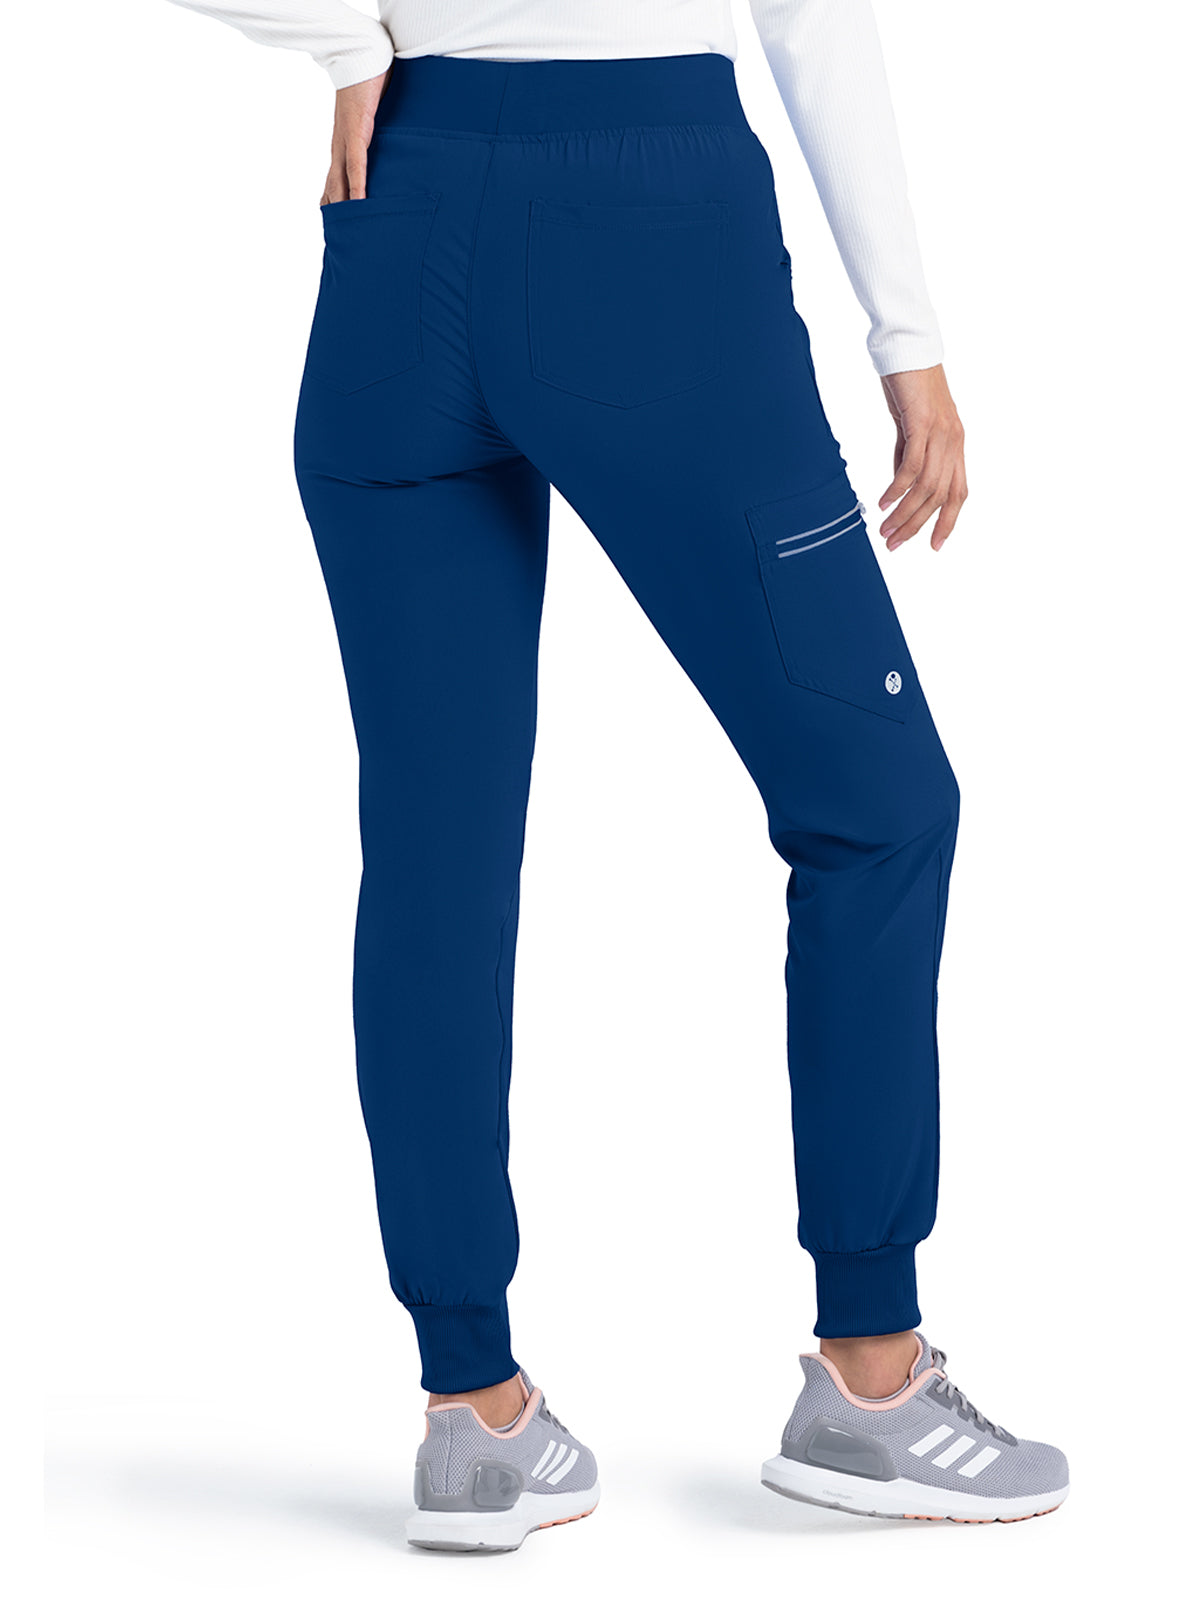 Women's Active Jogger Pant - 1529 - Navy Blue